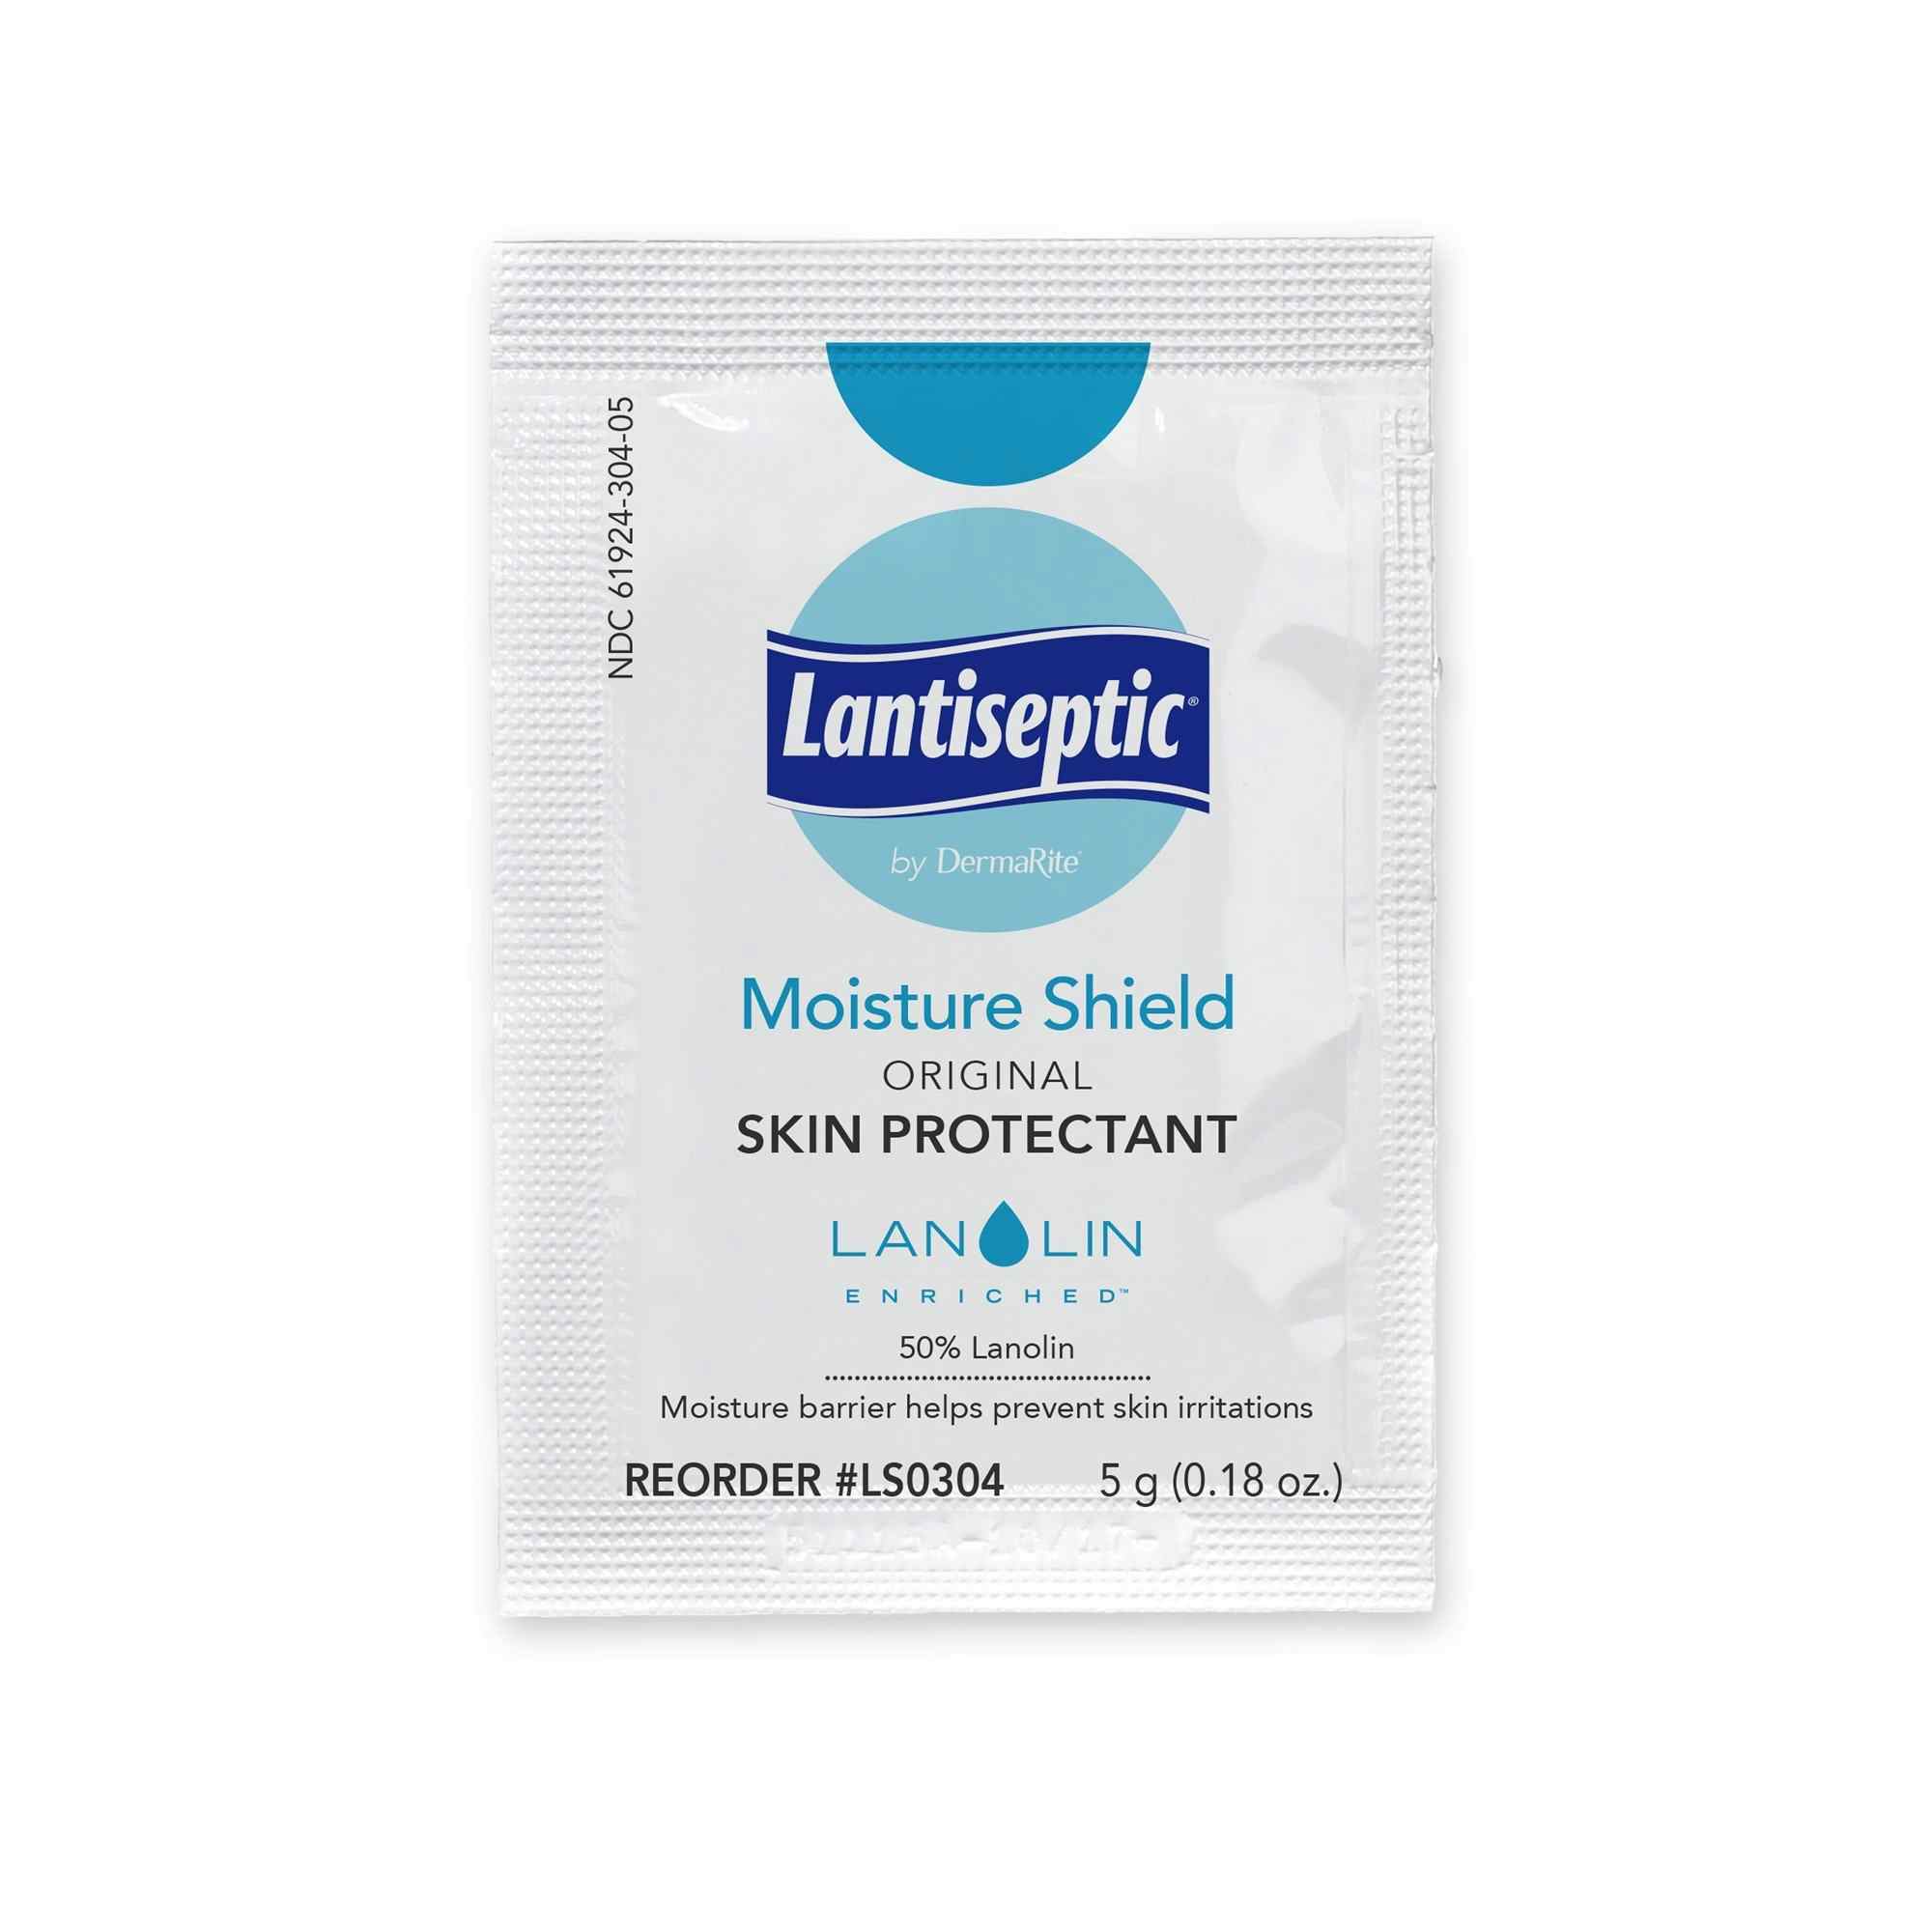 Lantiseptic Moisture Shield Original Skin Protectant , LS0304, 5 g - Pack of 144